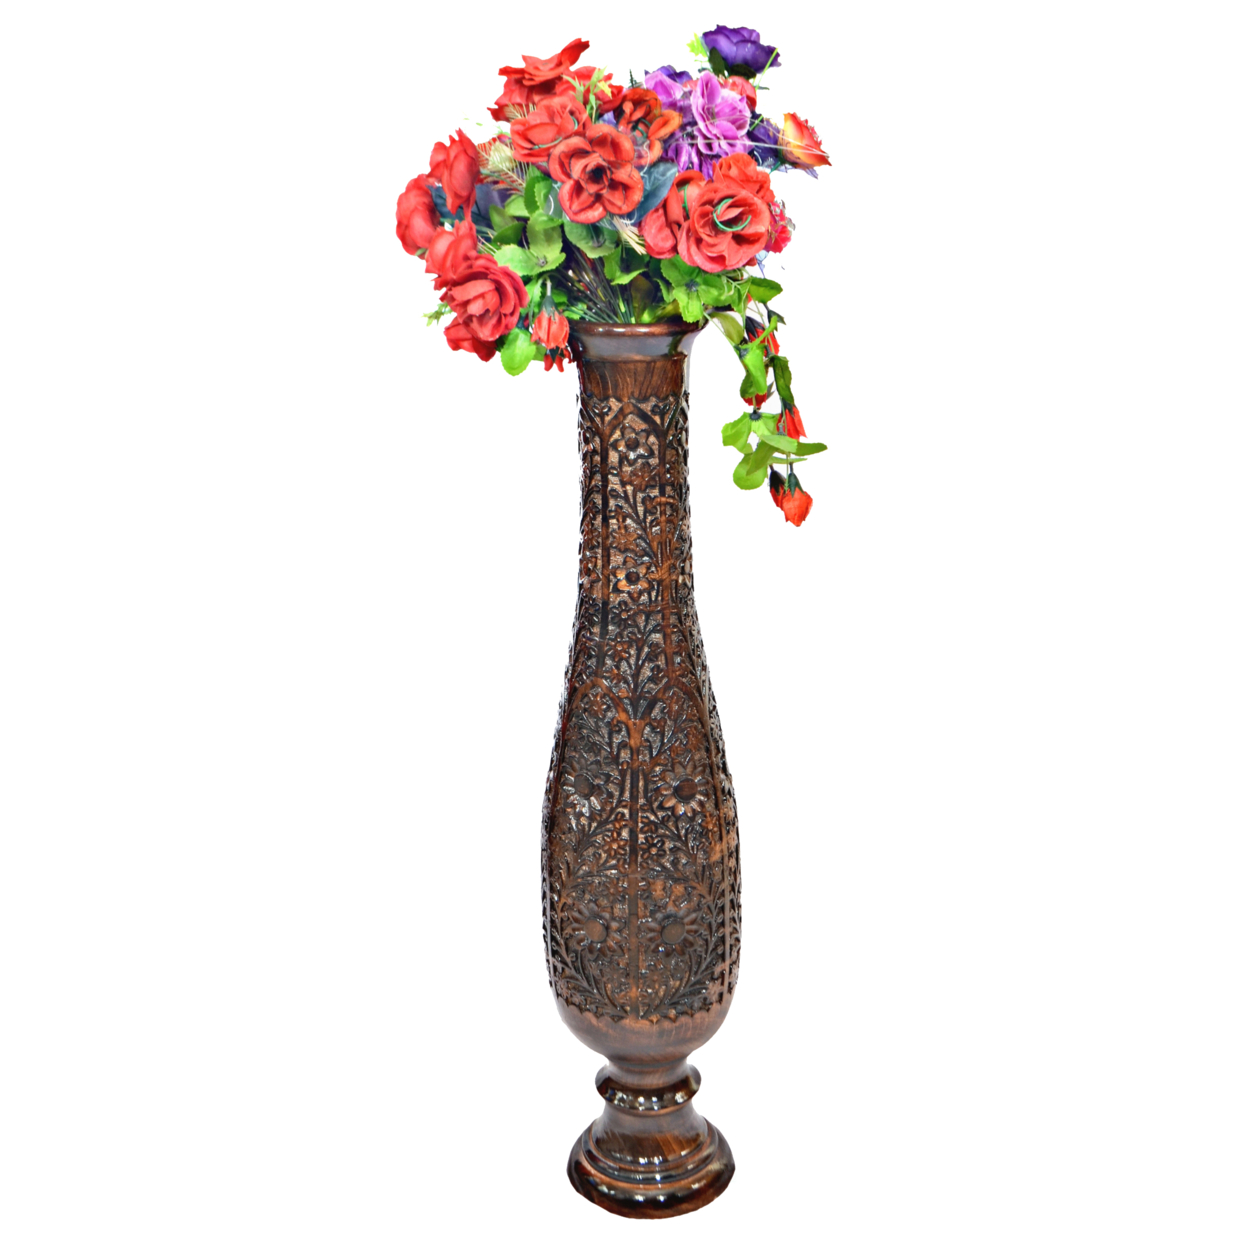 Antique Decorative Hand Curved Brown Mango Wood Floor Flower Vase Trumpet Design With Unique Textured Pattern, 36 Inch